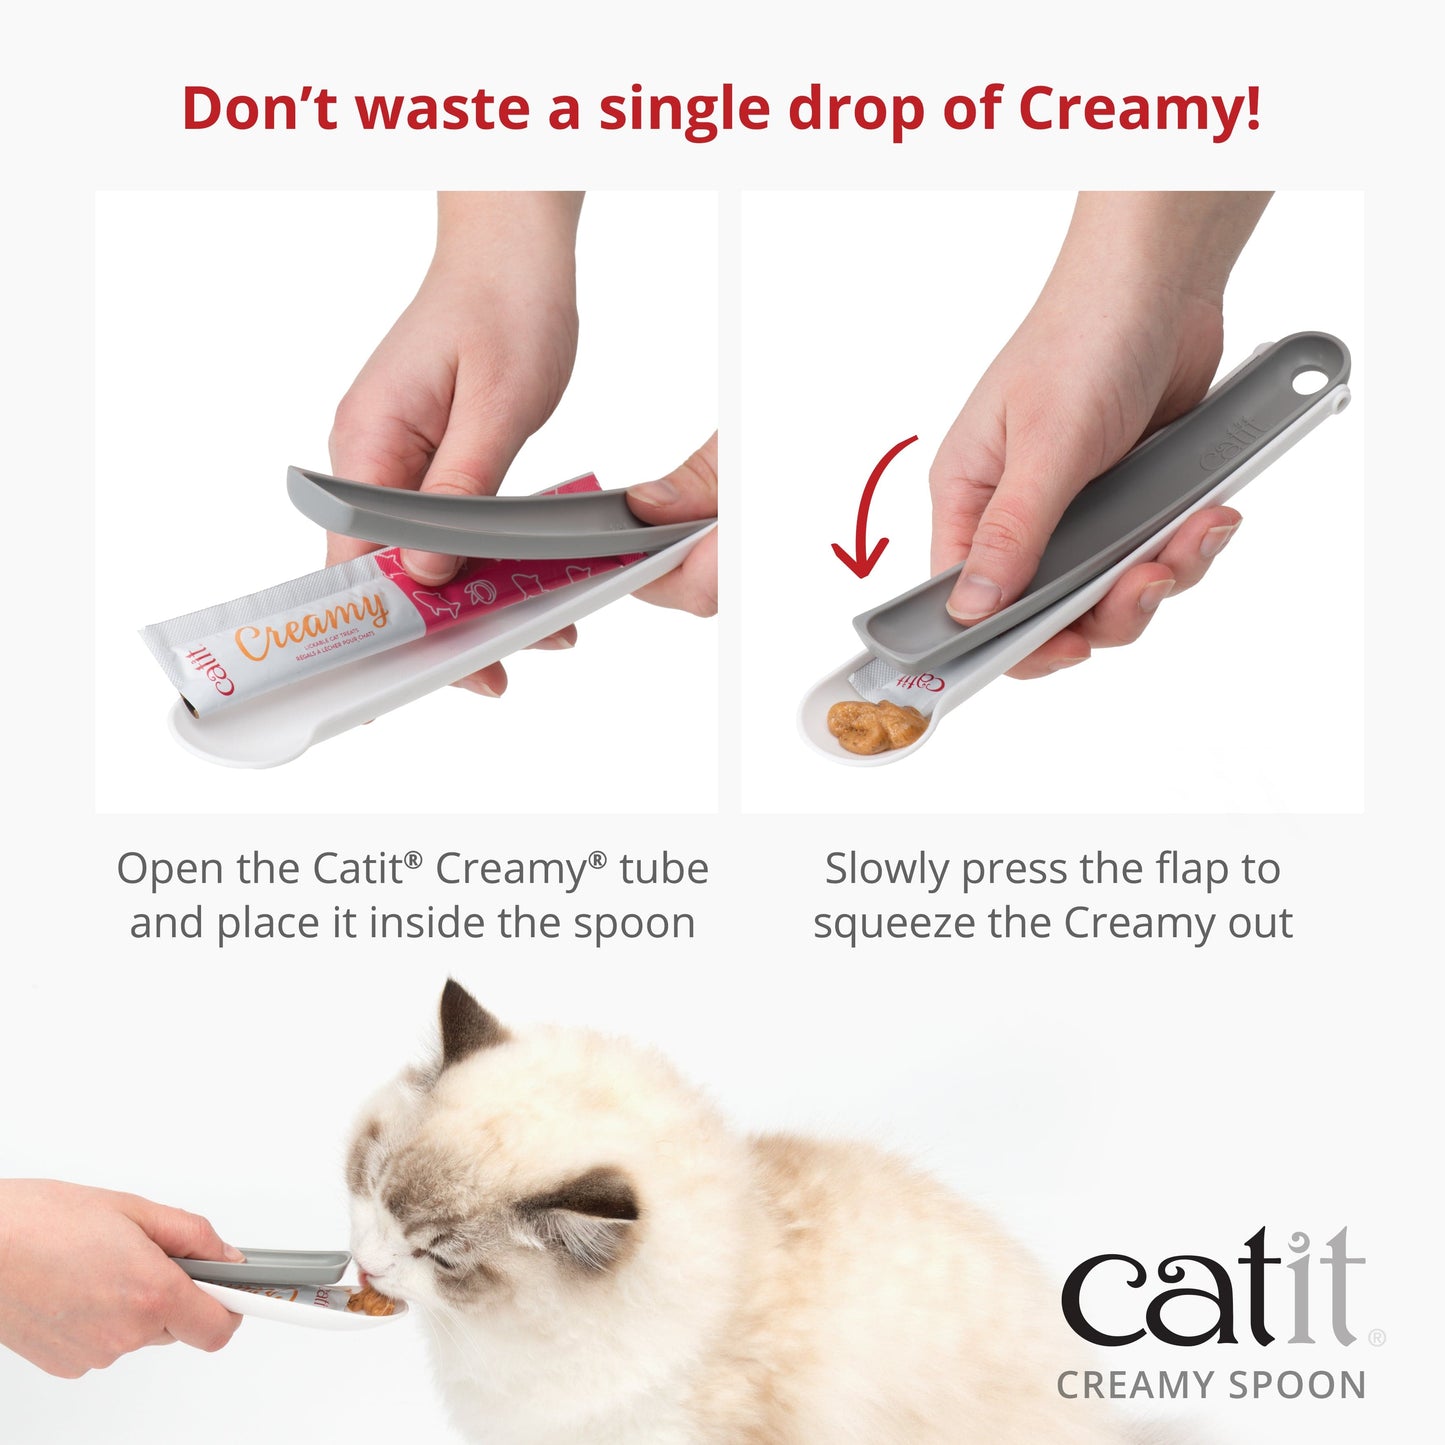 Catit Creamy Spoon